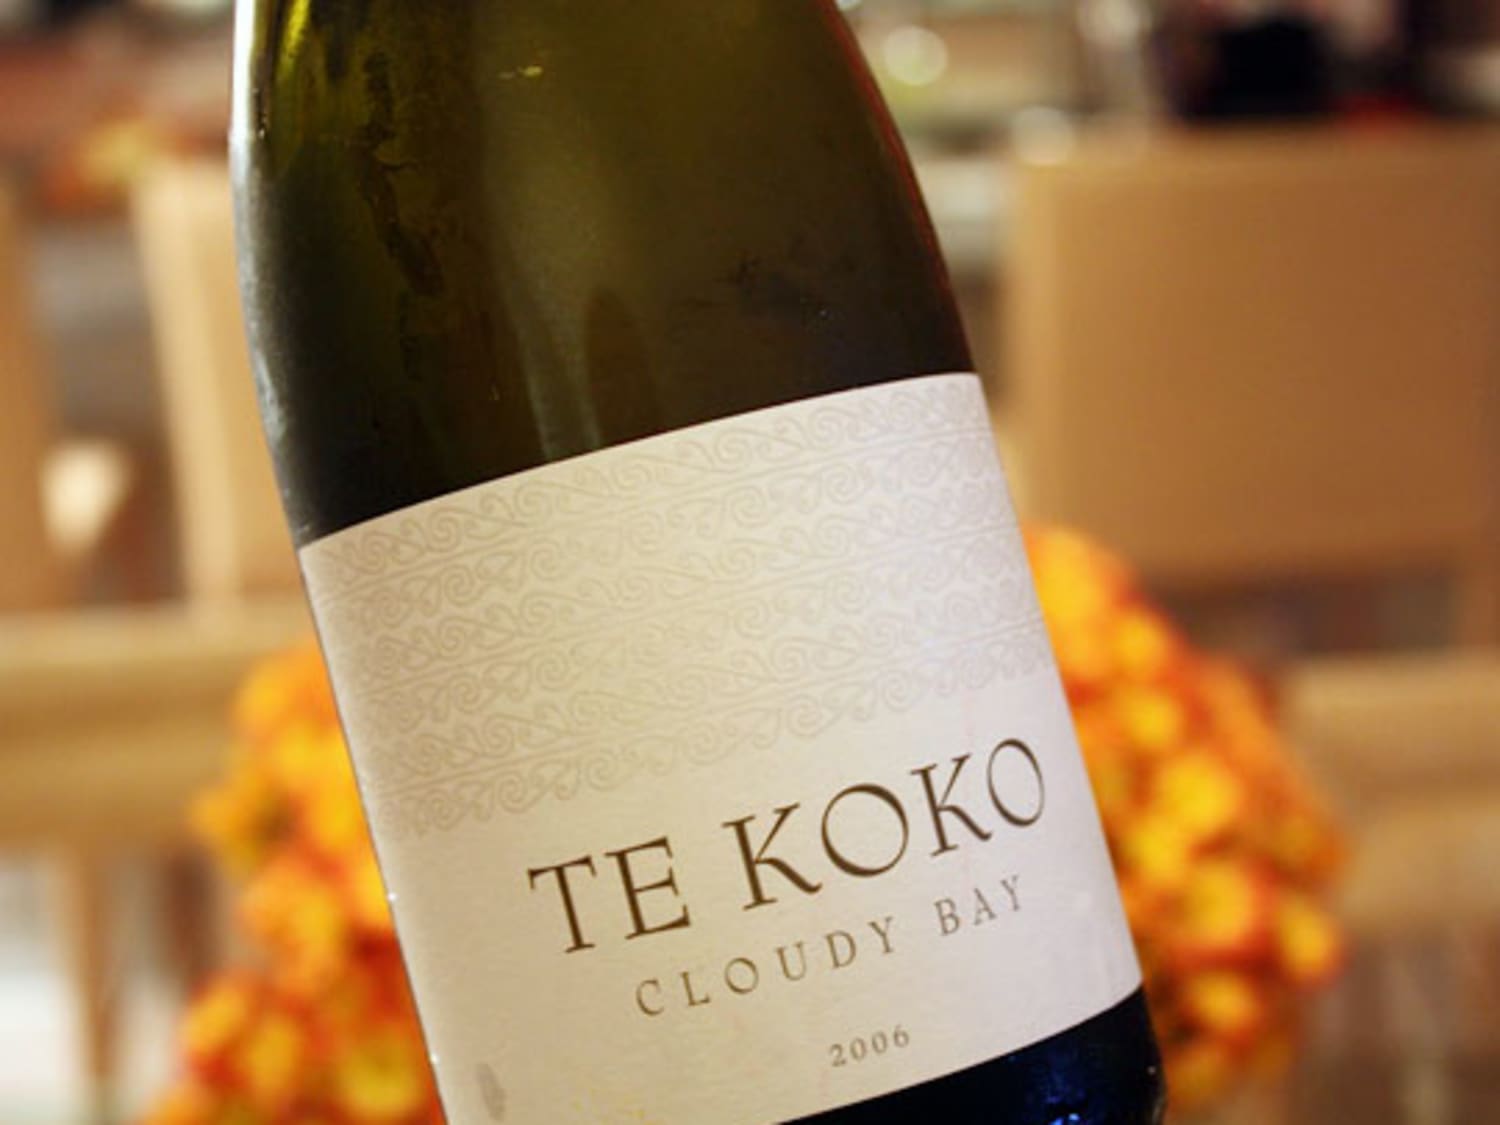 Cloudy Bay Te Koko Sauvignon Blanc 2014 : r/wine